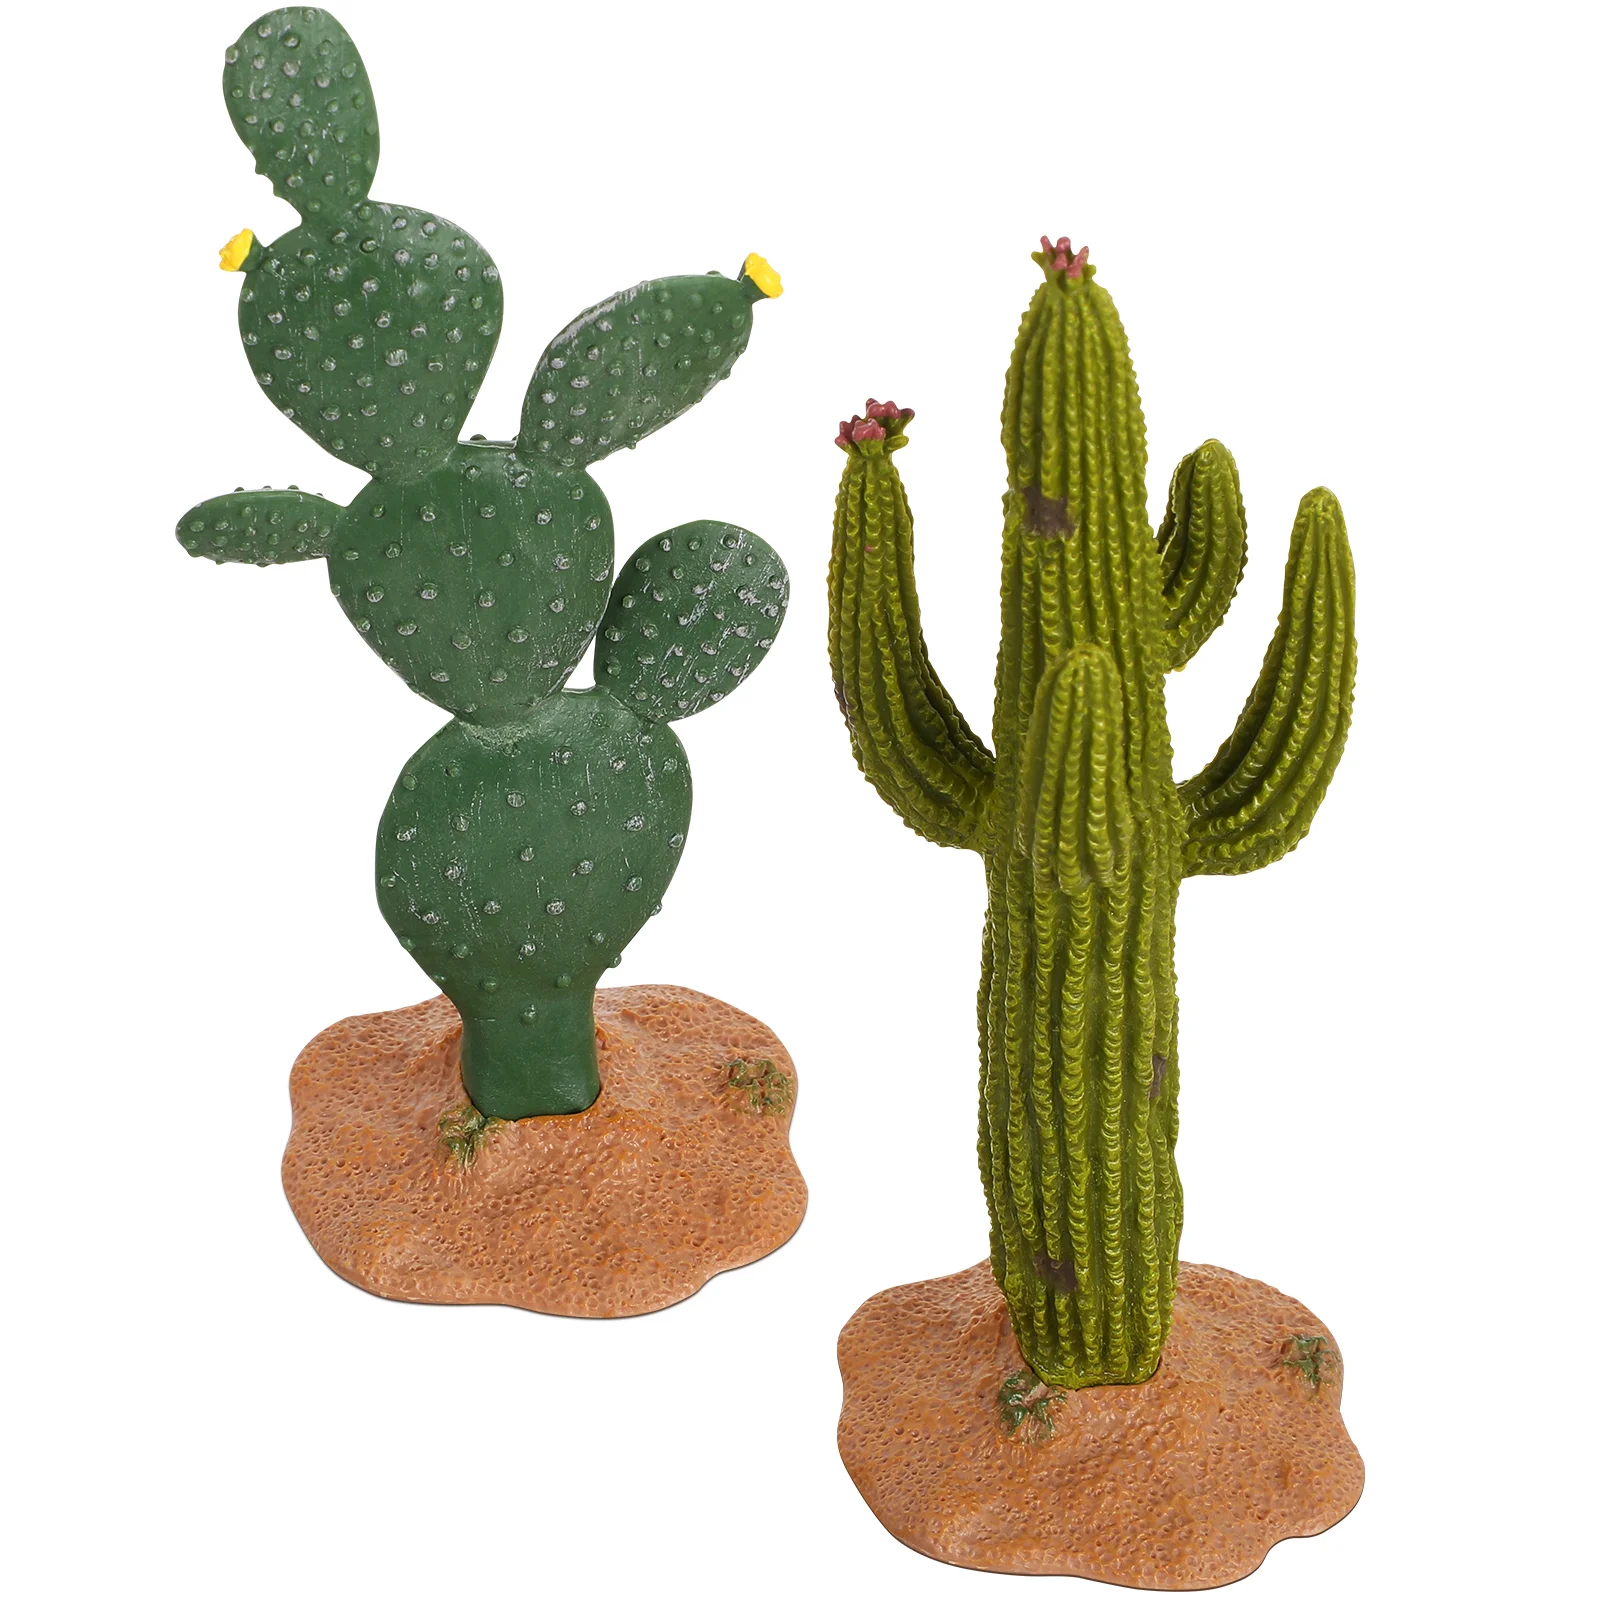 

2 Pcs Simulated Cactus Lifelike Cactus Figurines Desktop Artificial Cactus Modeling Statues